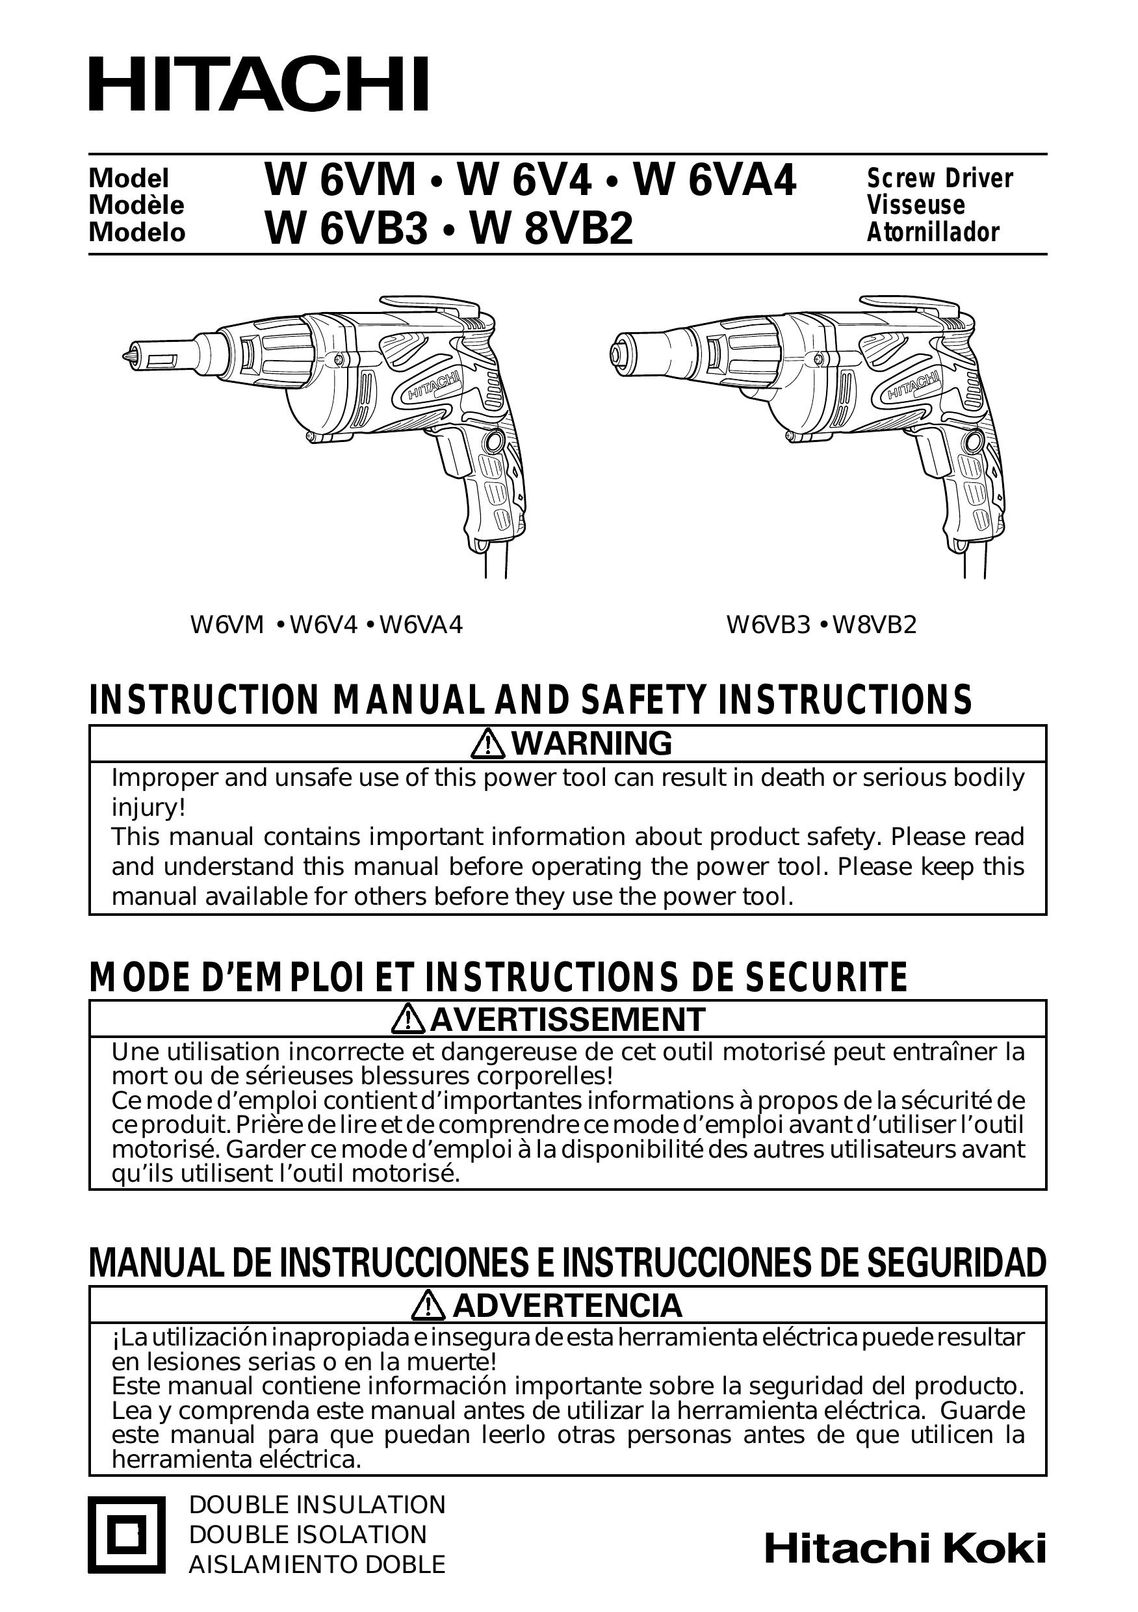 Hitachi Koki USA W6VA4 Cordless Drill User Manual